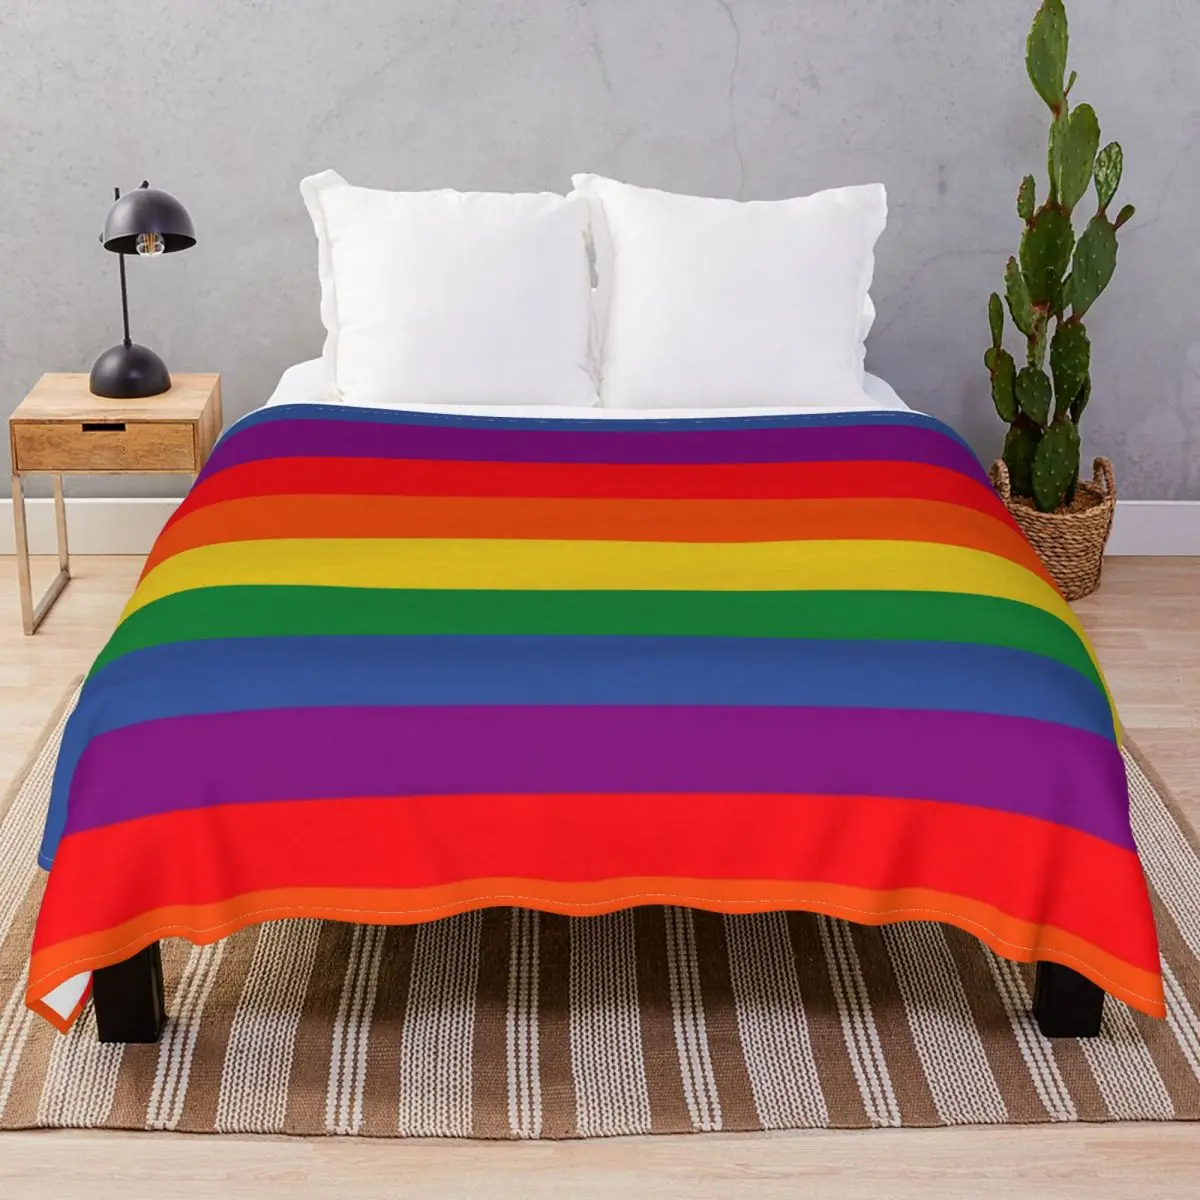 

Rainbow Stripes Blanket Flannel Summer Multi-function Throw Blankets for Bed Sofa Travel Cinema